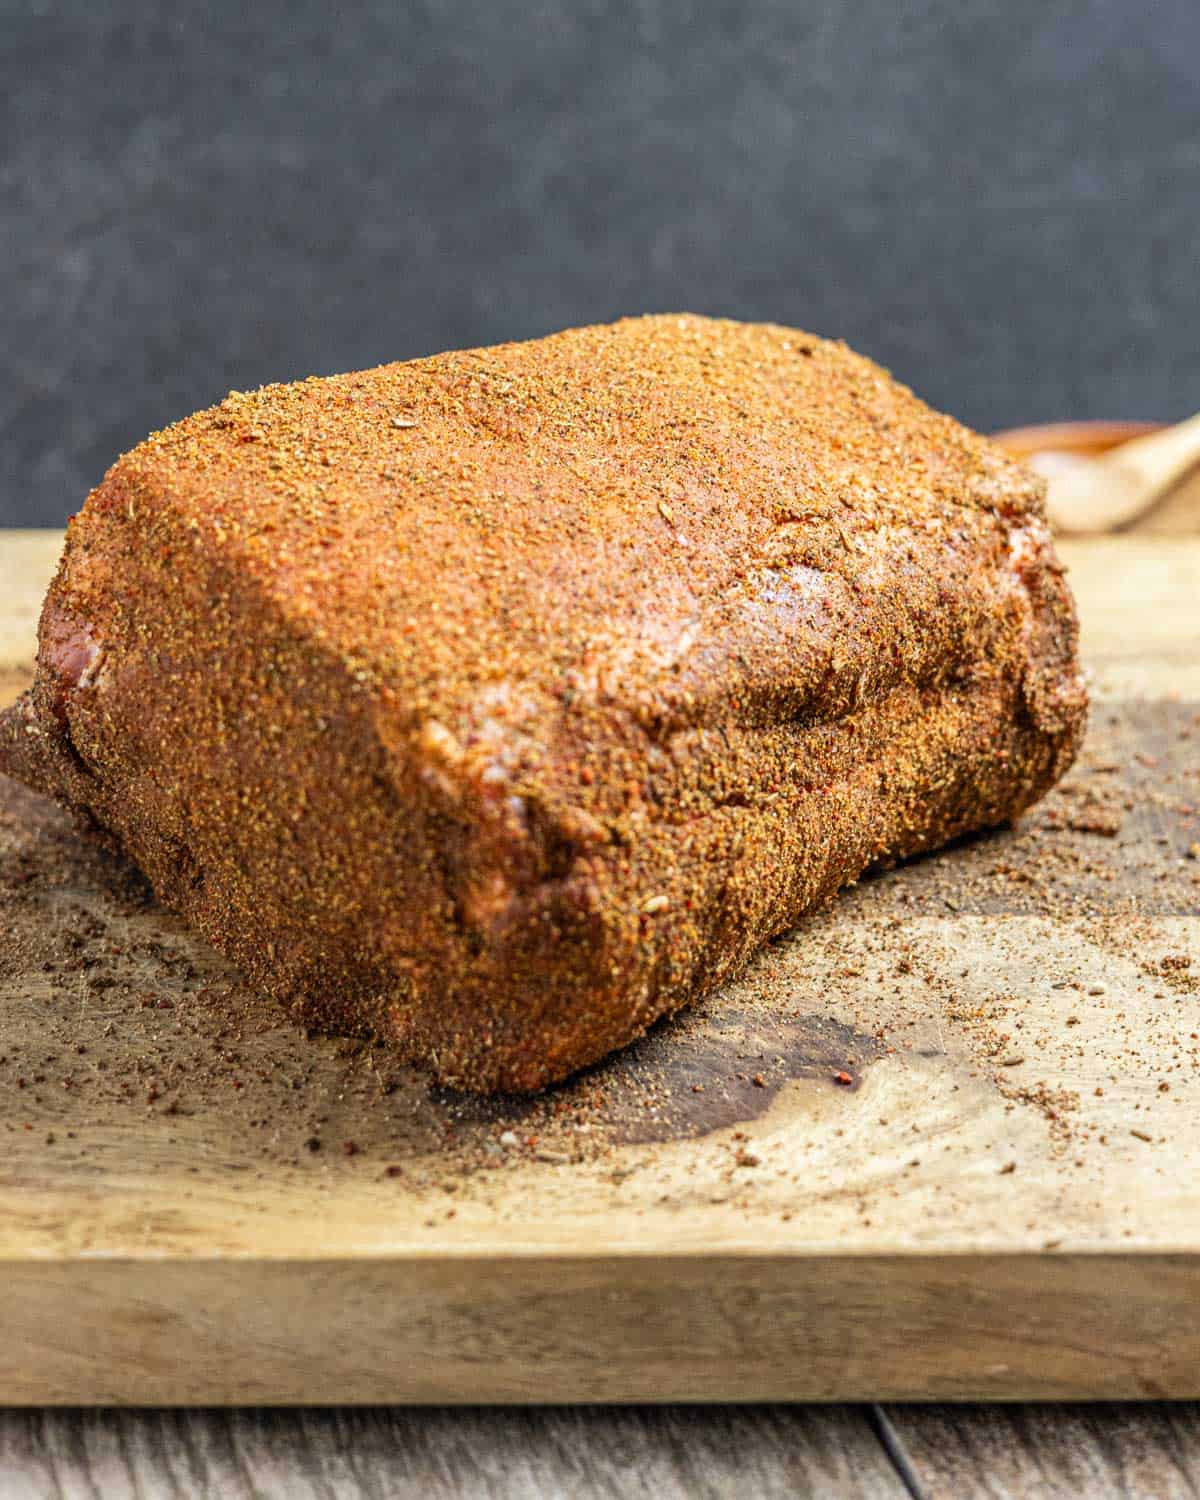 Pulled pork rub coating a pork roast on a wood board, ready to cook.